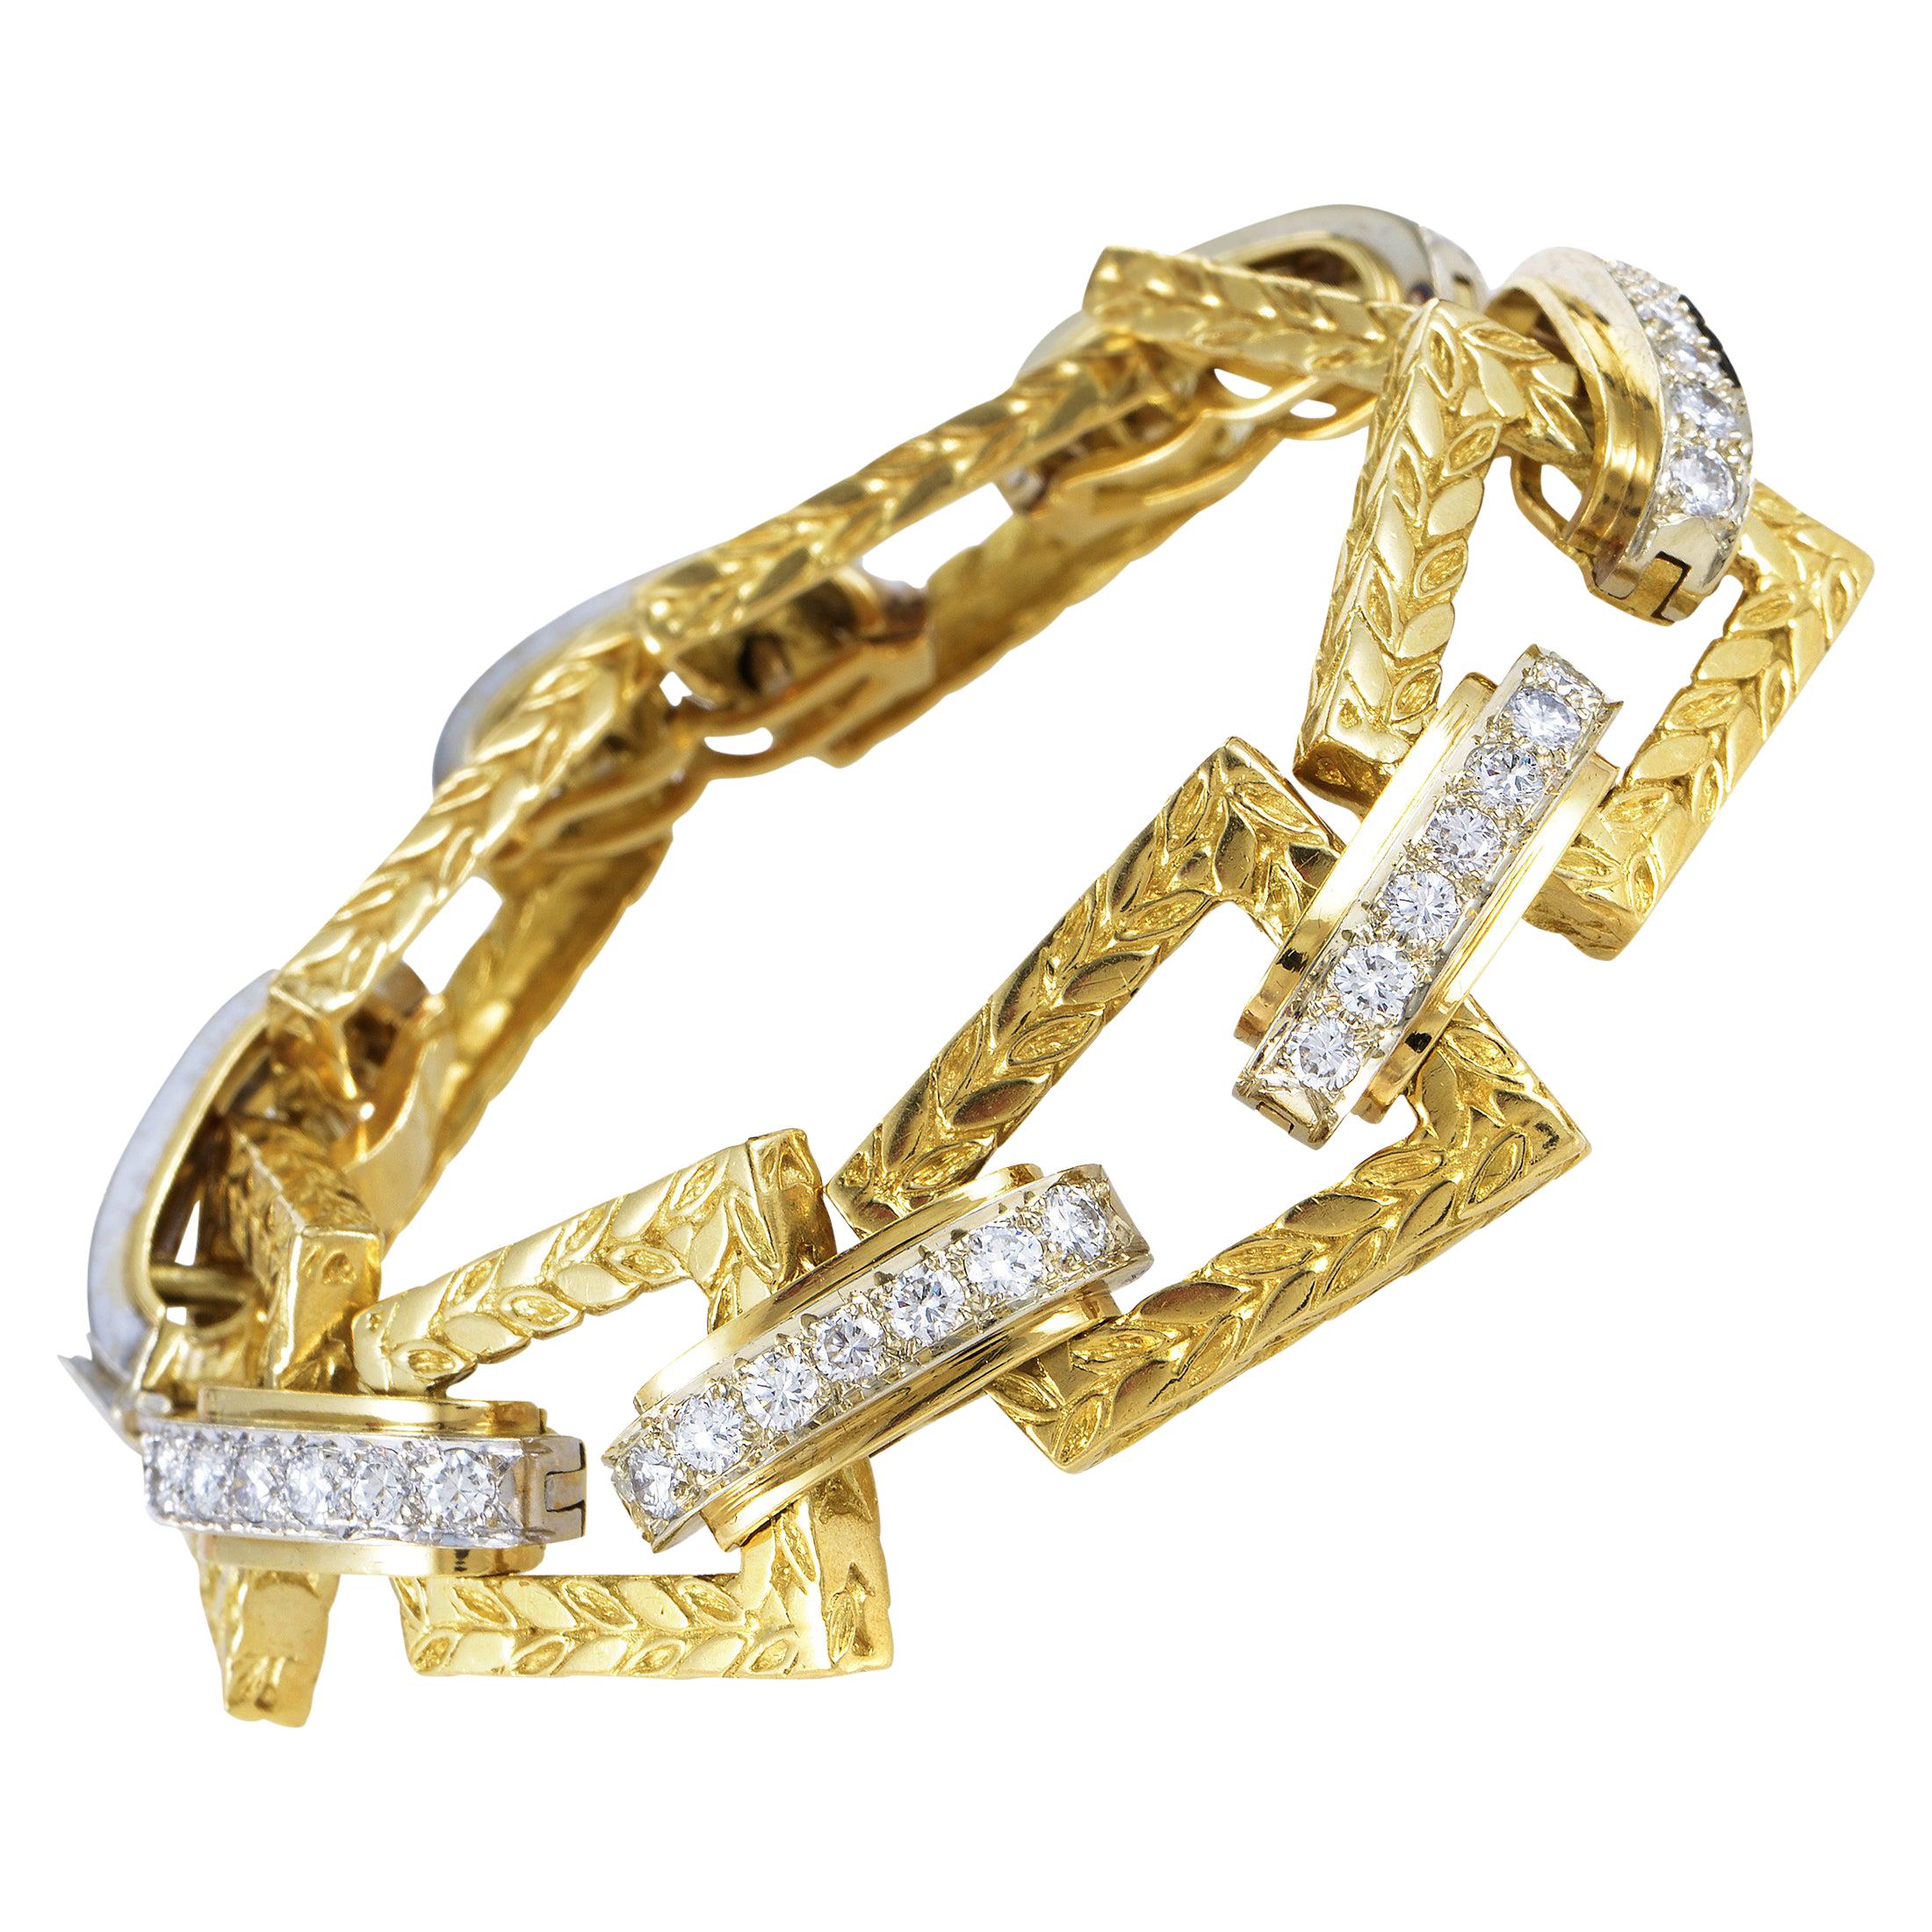 Hammerman Brother 18 Karat White and Yellow Gold 4.75 ct Diamond Link Bracelet